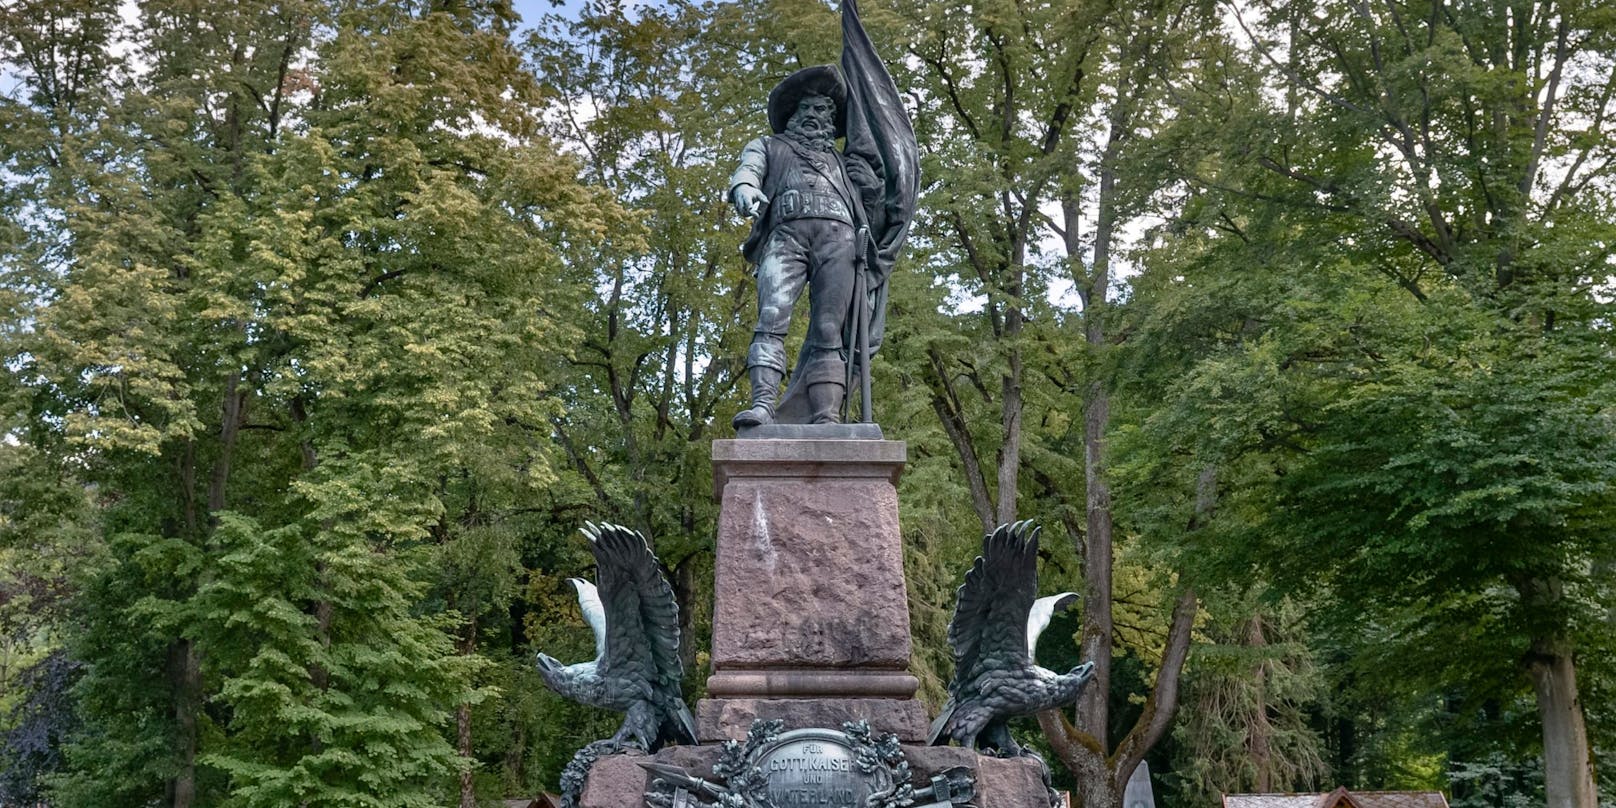 Das Andreas-Hofer-Denkmal am Innsbrucker Bergisel wurde von Vandalen verschandelt. (Archivbild)